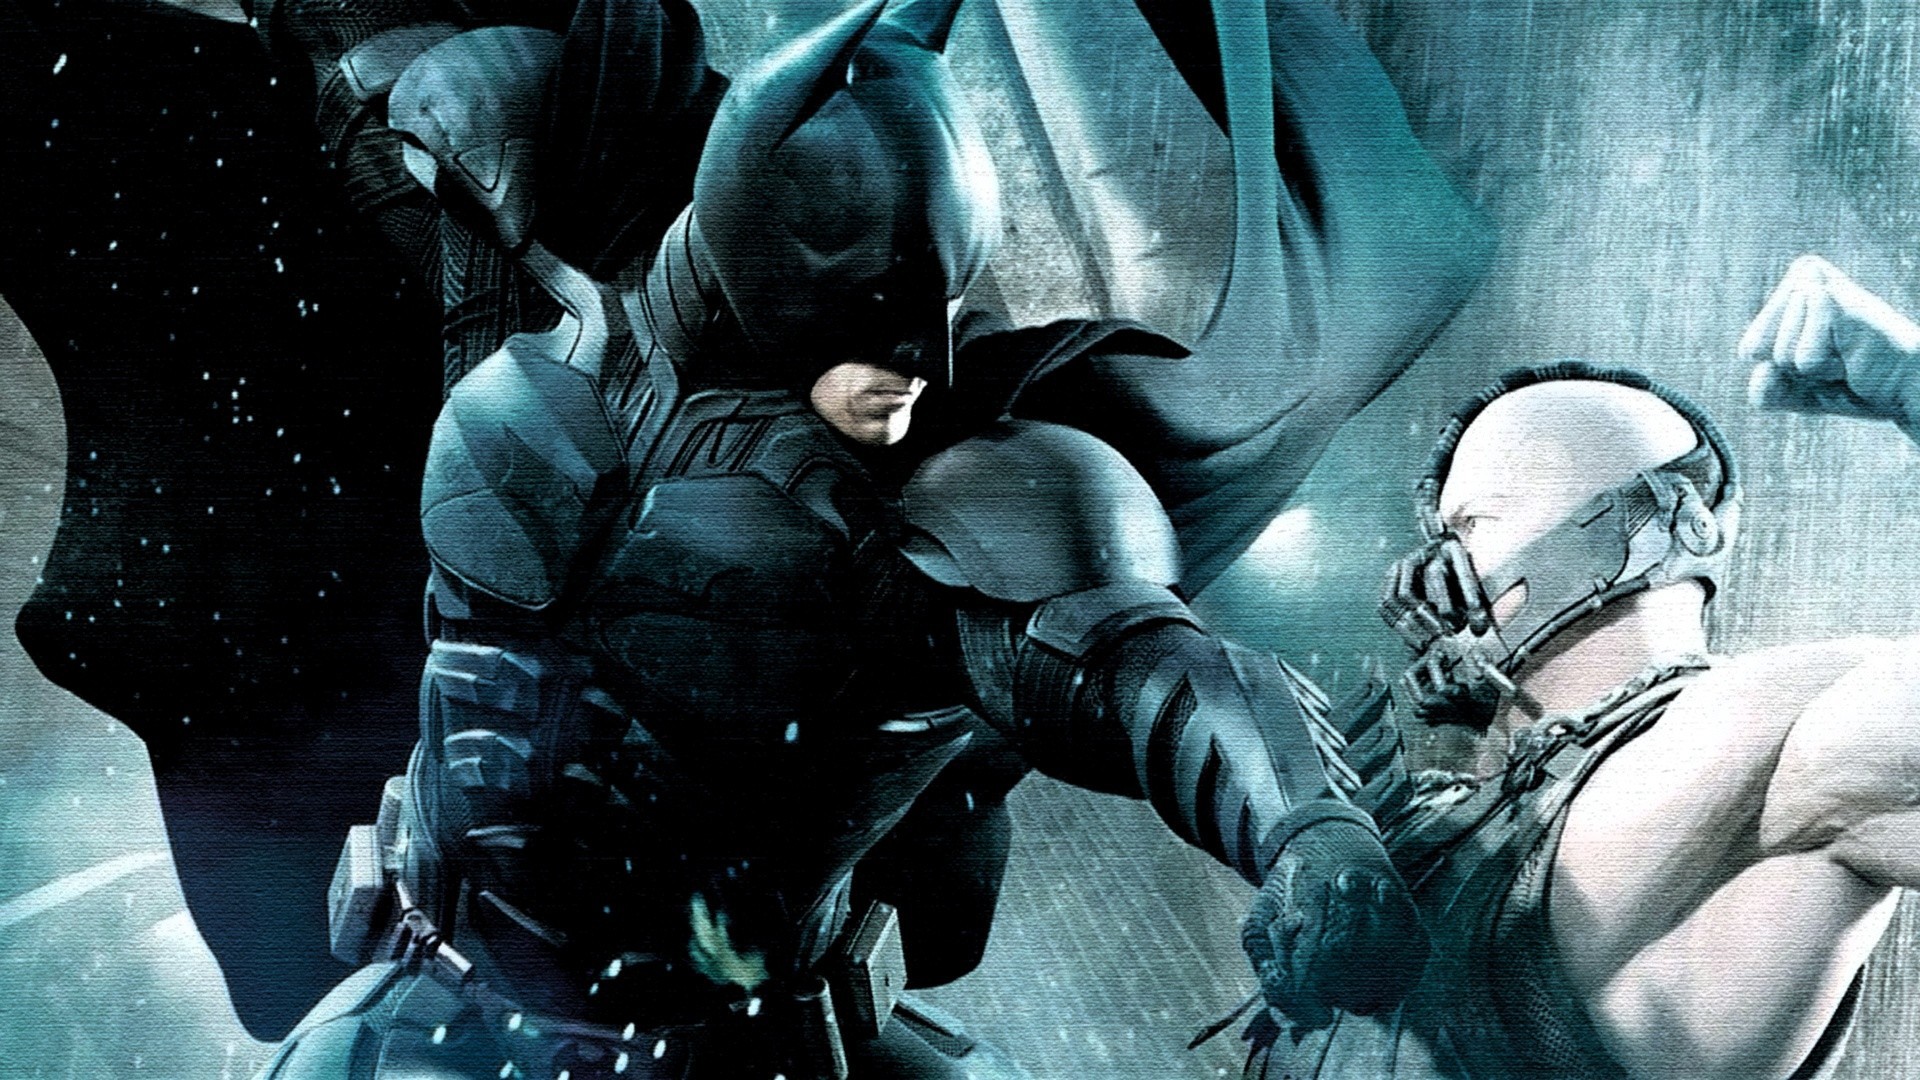 General 1920x1080 The Dark Knight Rises Batman Bane movies hero villains superhero DC Comics Christian Bale Tom Hardy actor Warner Brothers Christopher Nolan